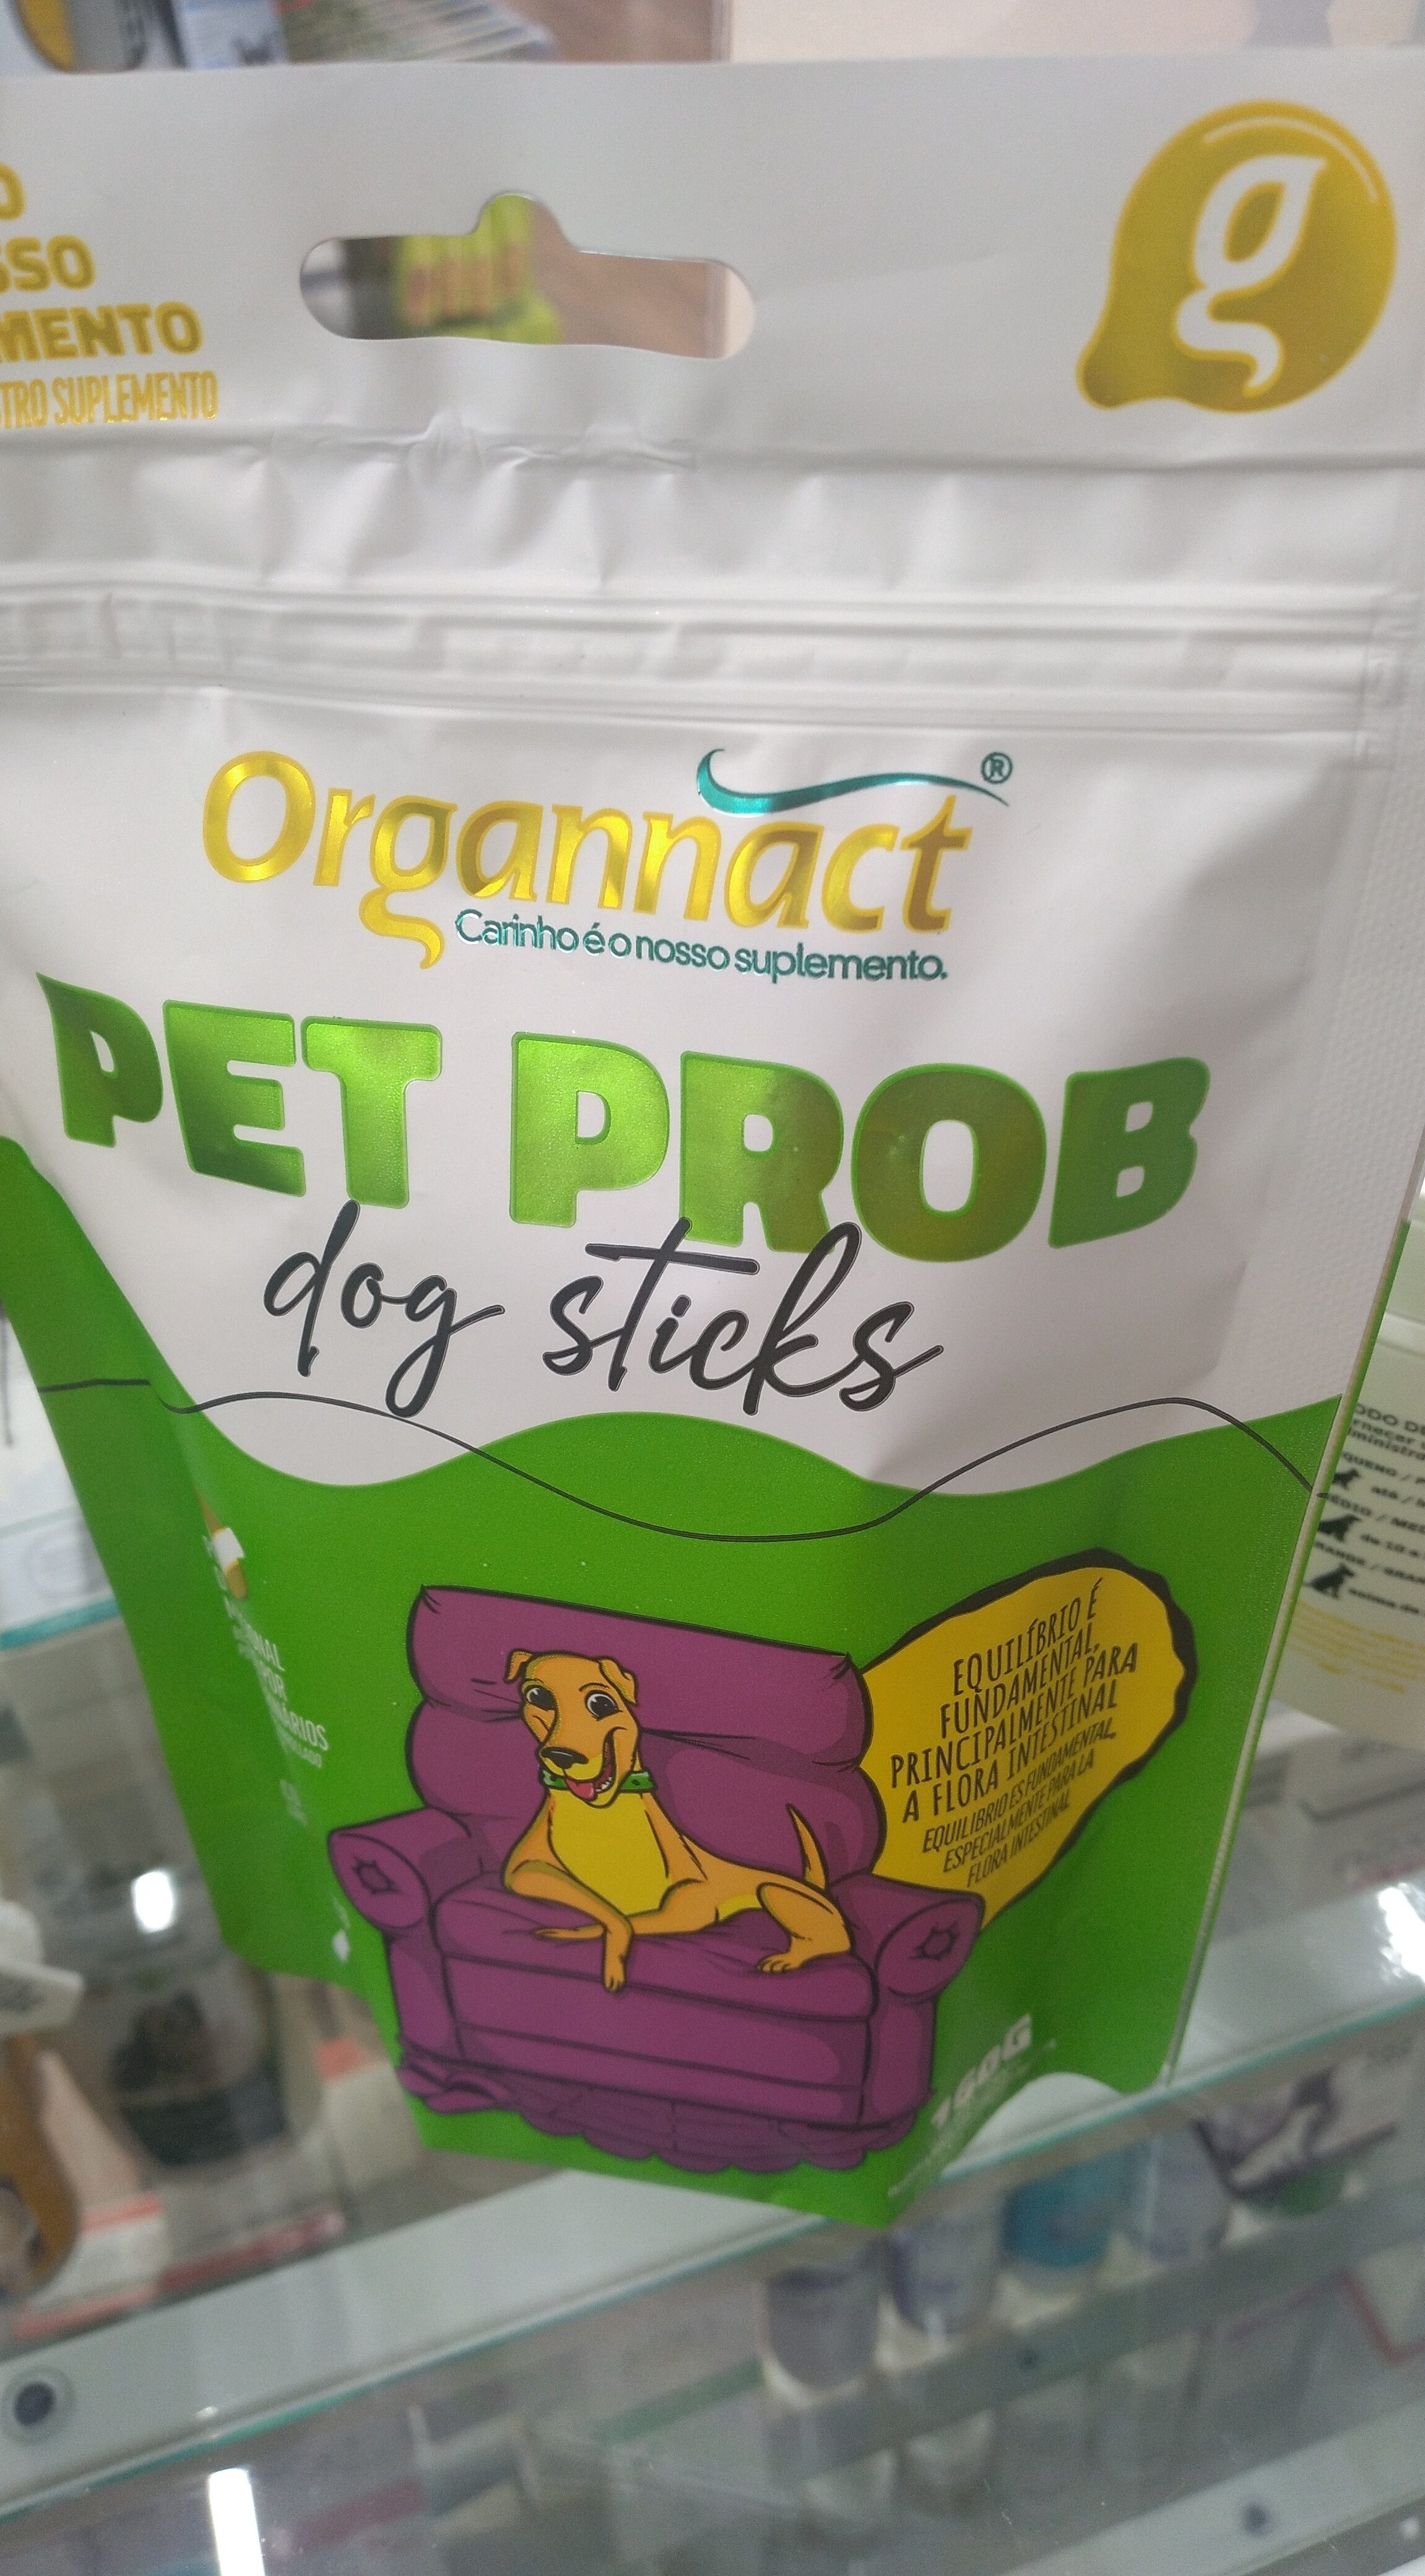 Supl. Organnact Pet Prob dog sticks 160g - Product - pt